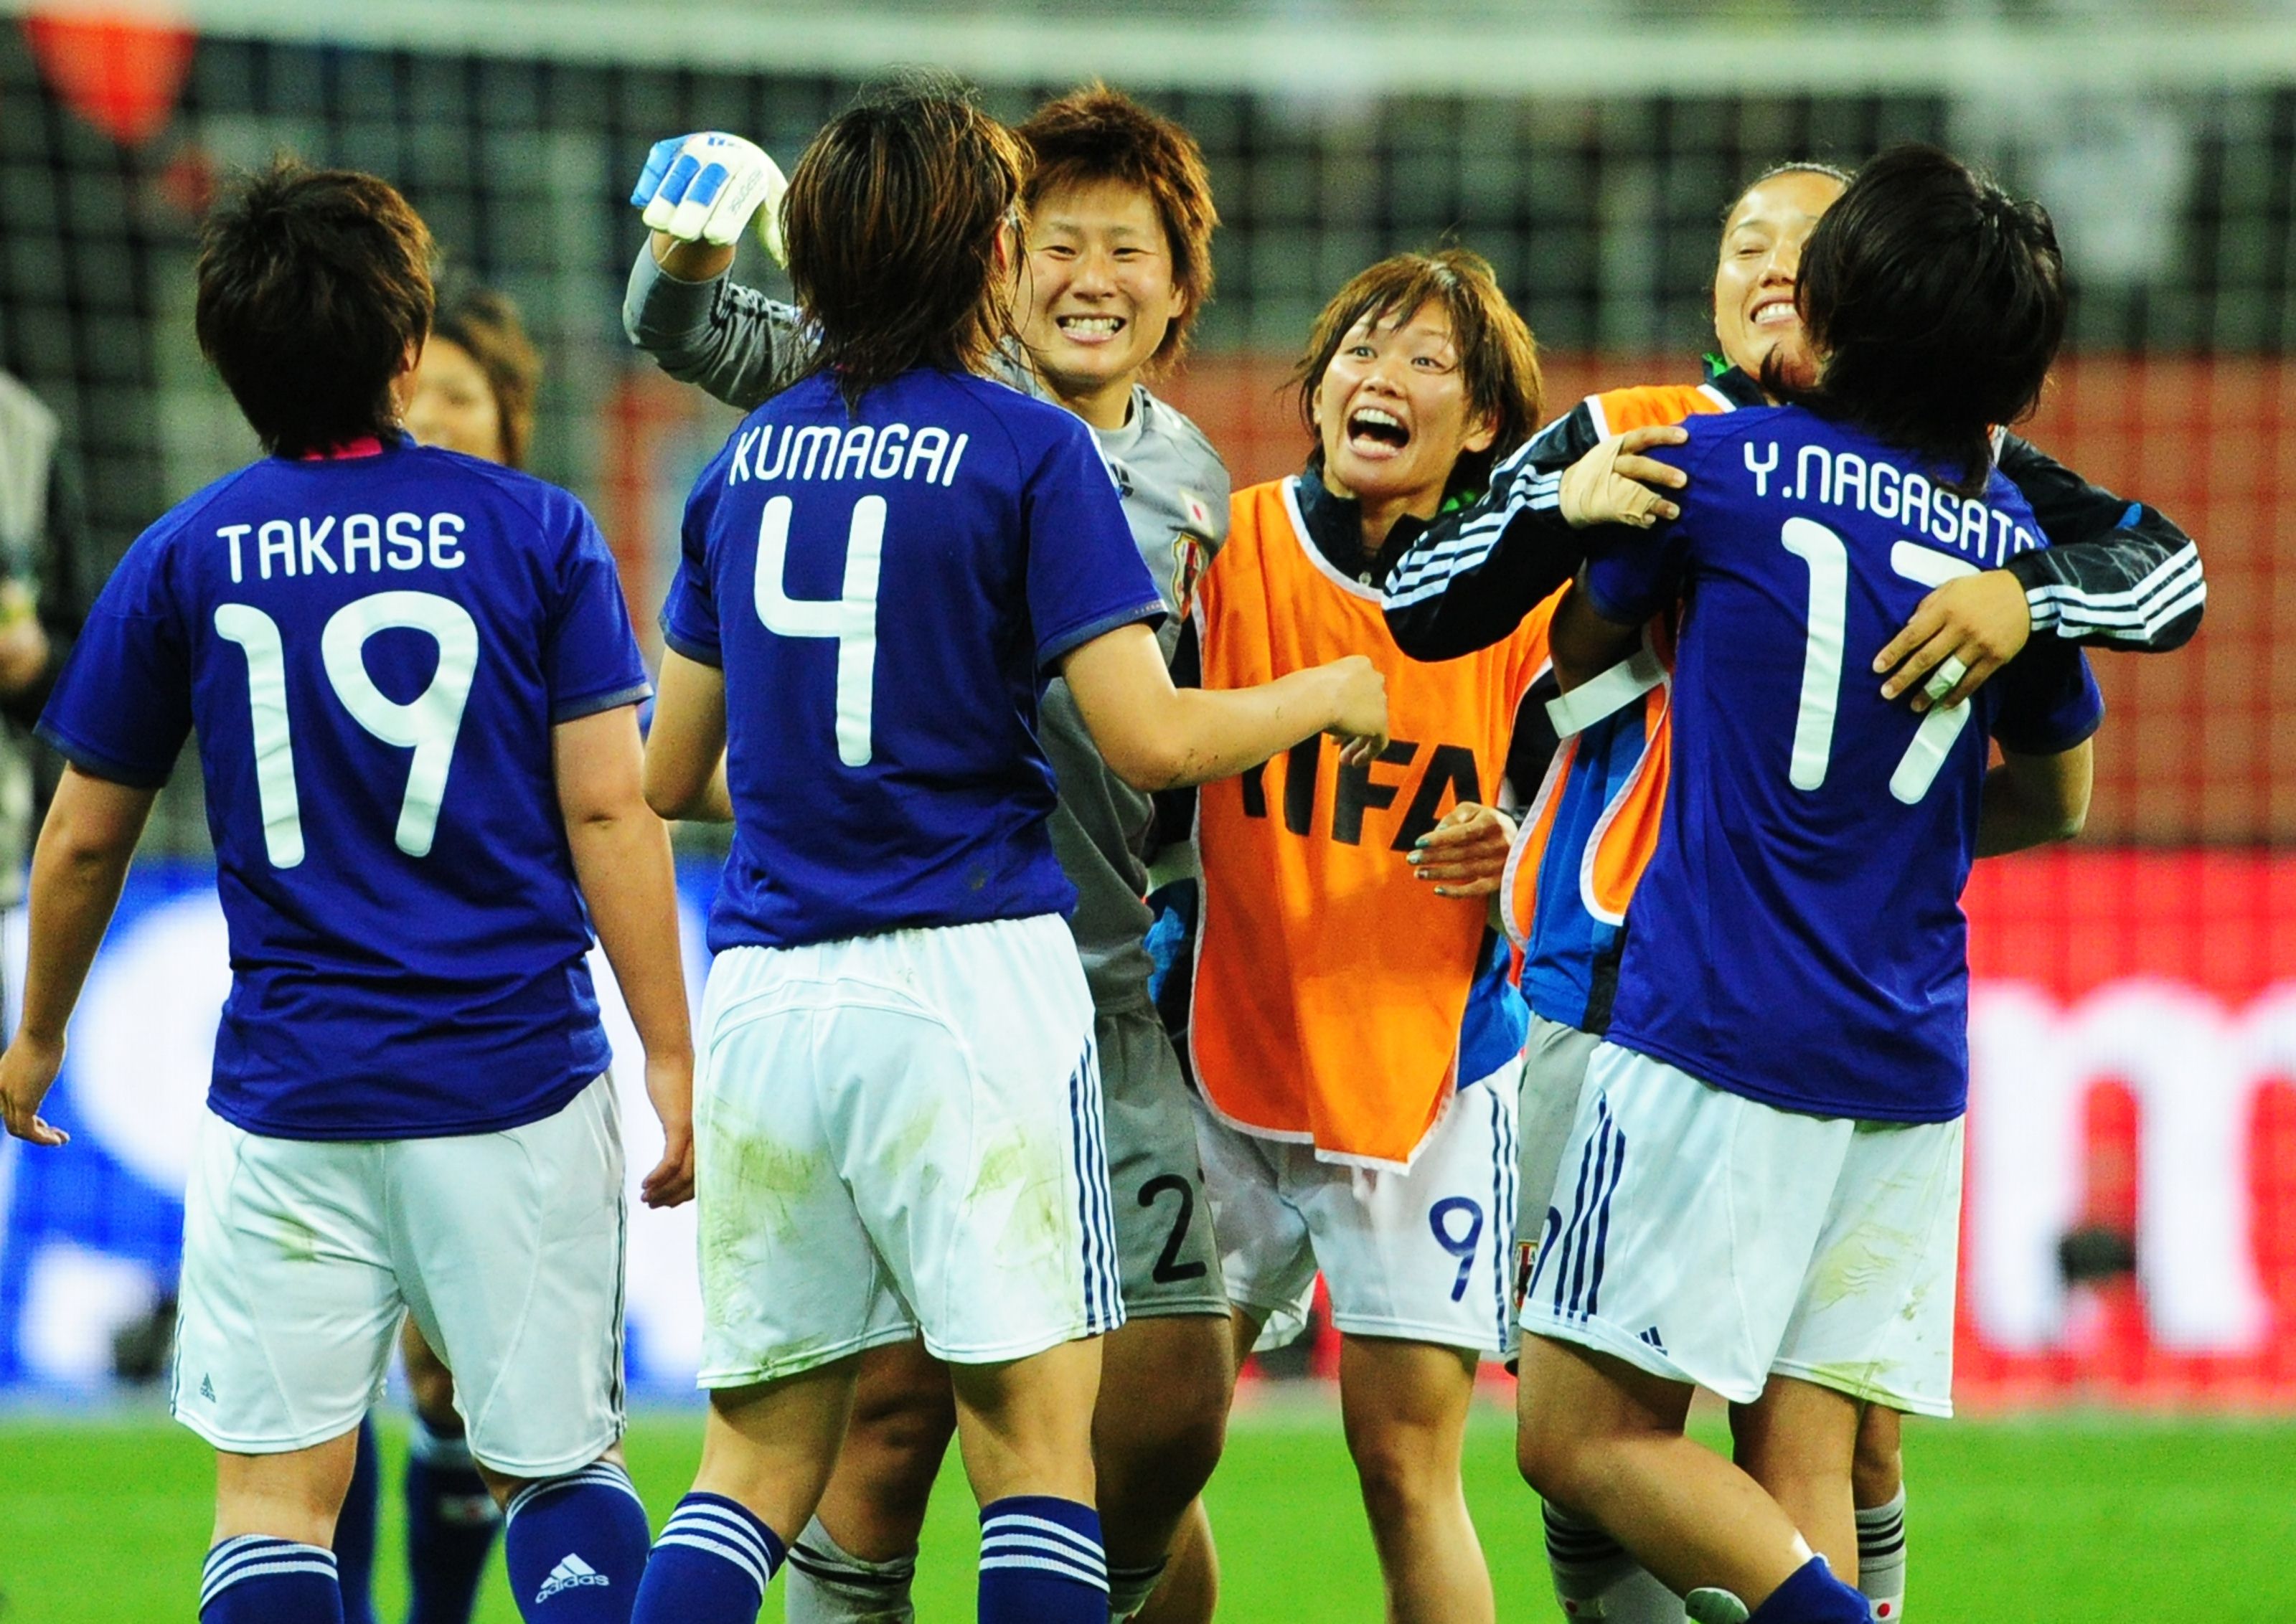 Demam Sepak Bola Kini Sedang Melanda Jepang Bolanet